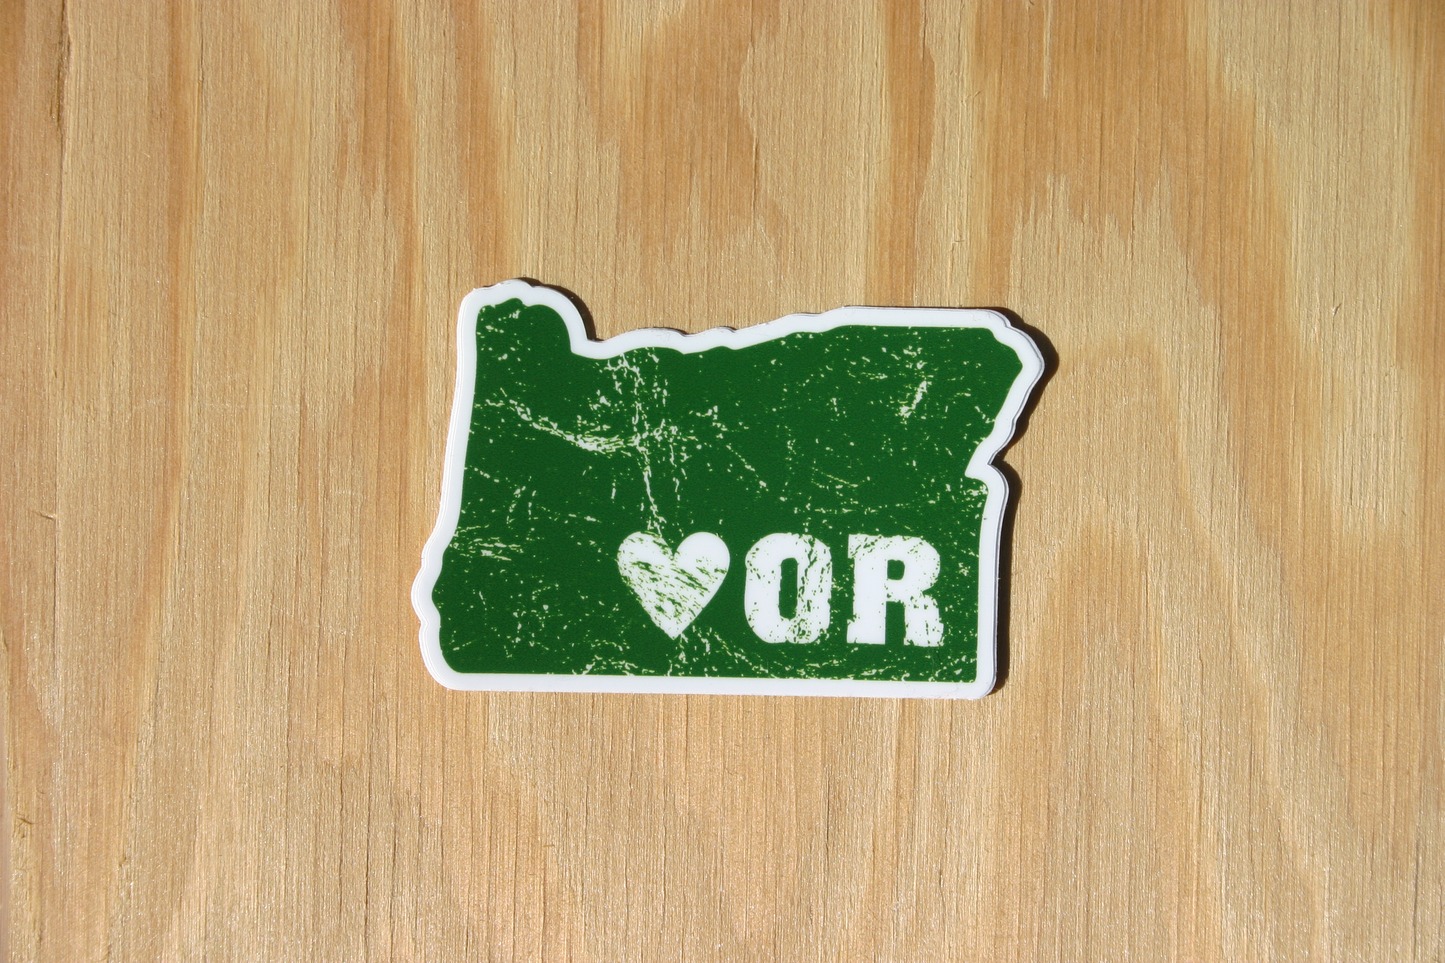 Oregon State